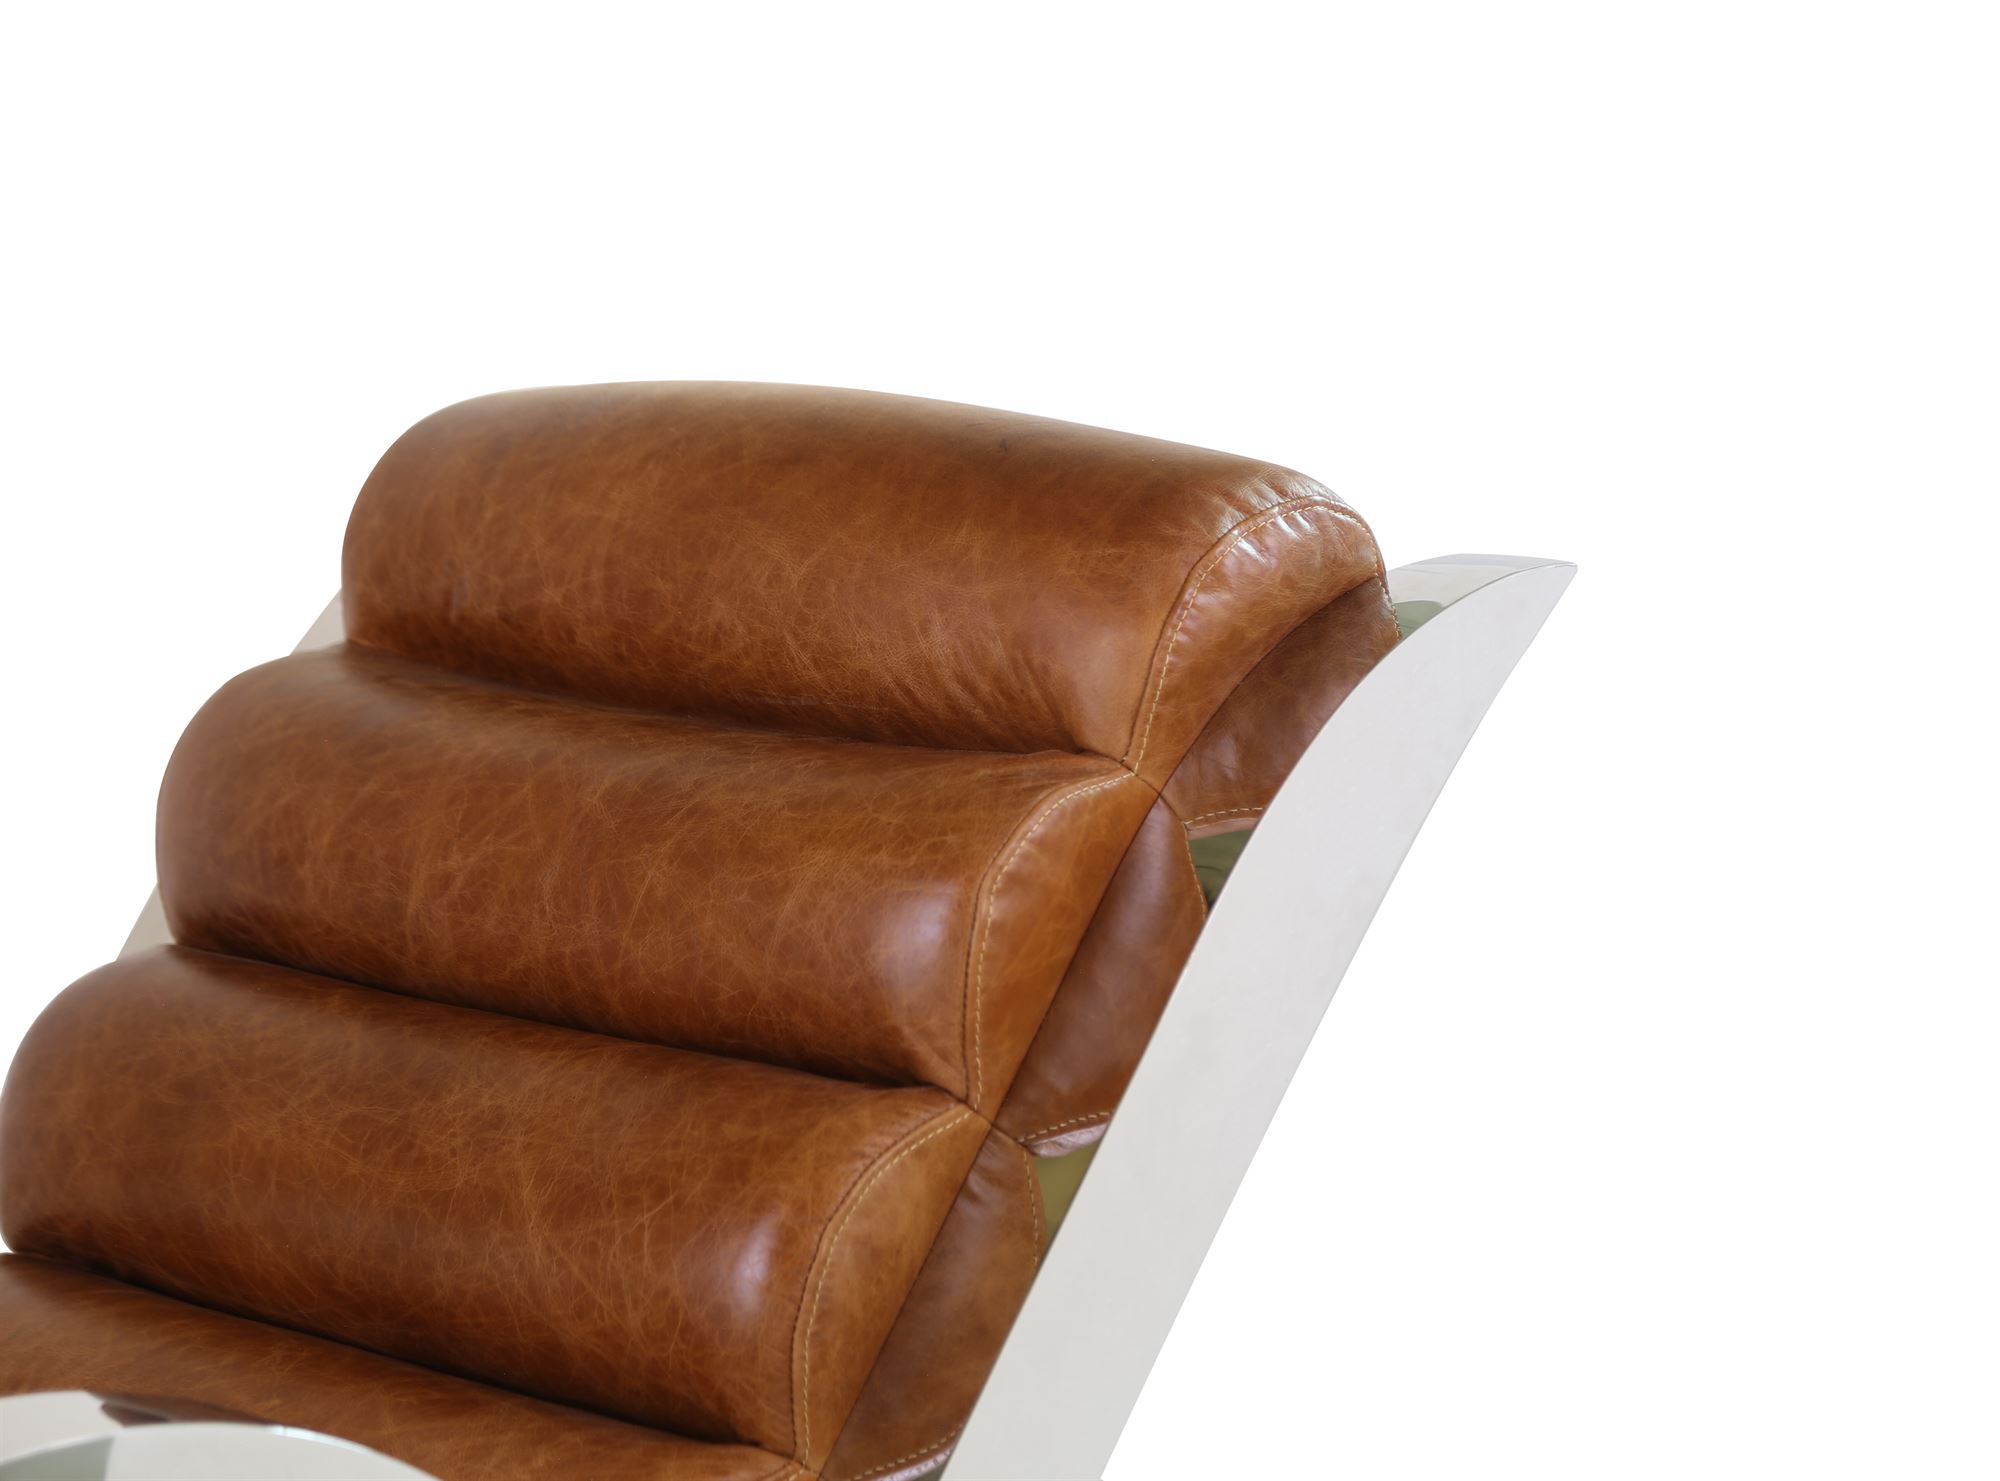 Demon Play bande møbel Hvilestol Læder/Stainless Art deko chair Cuba brown.